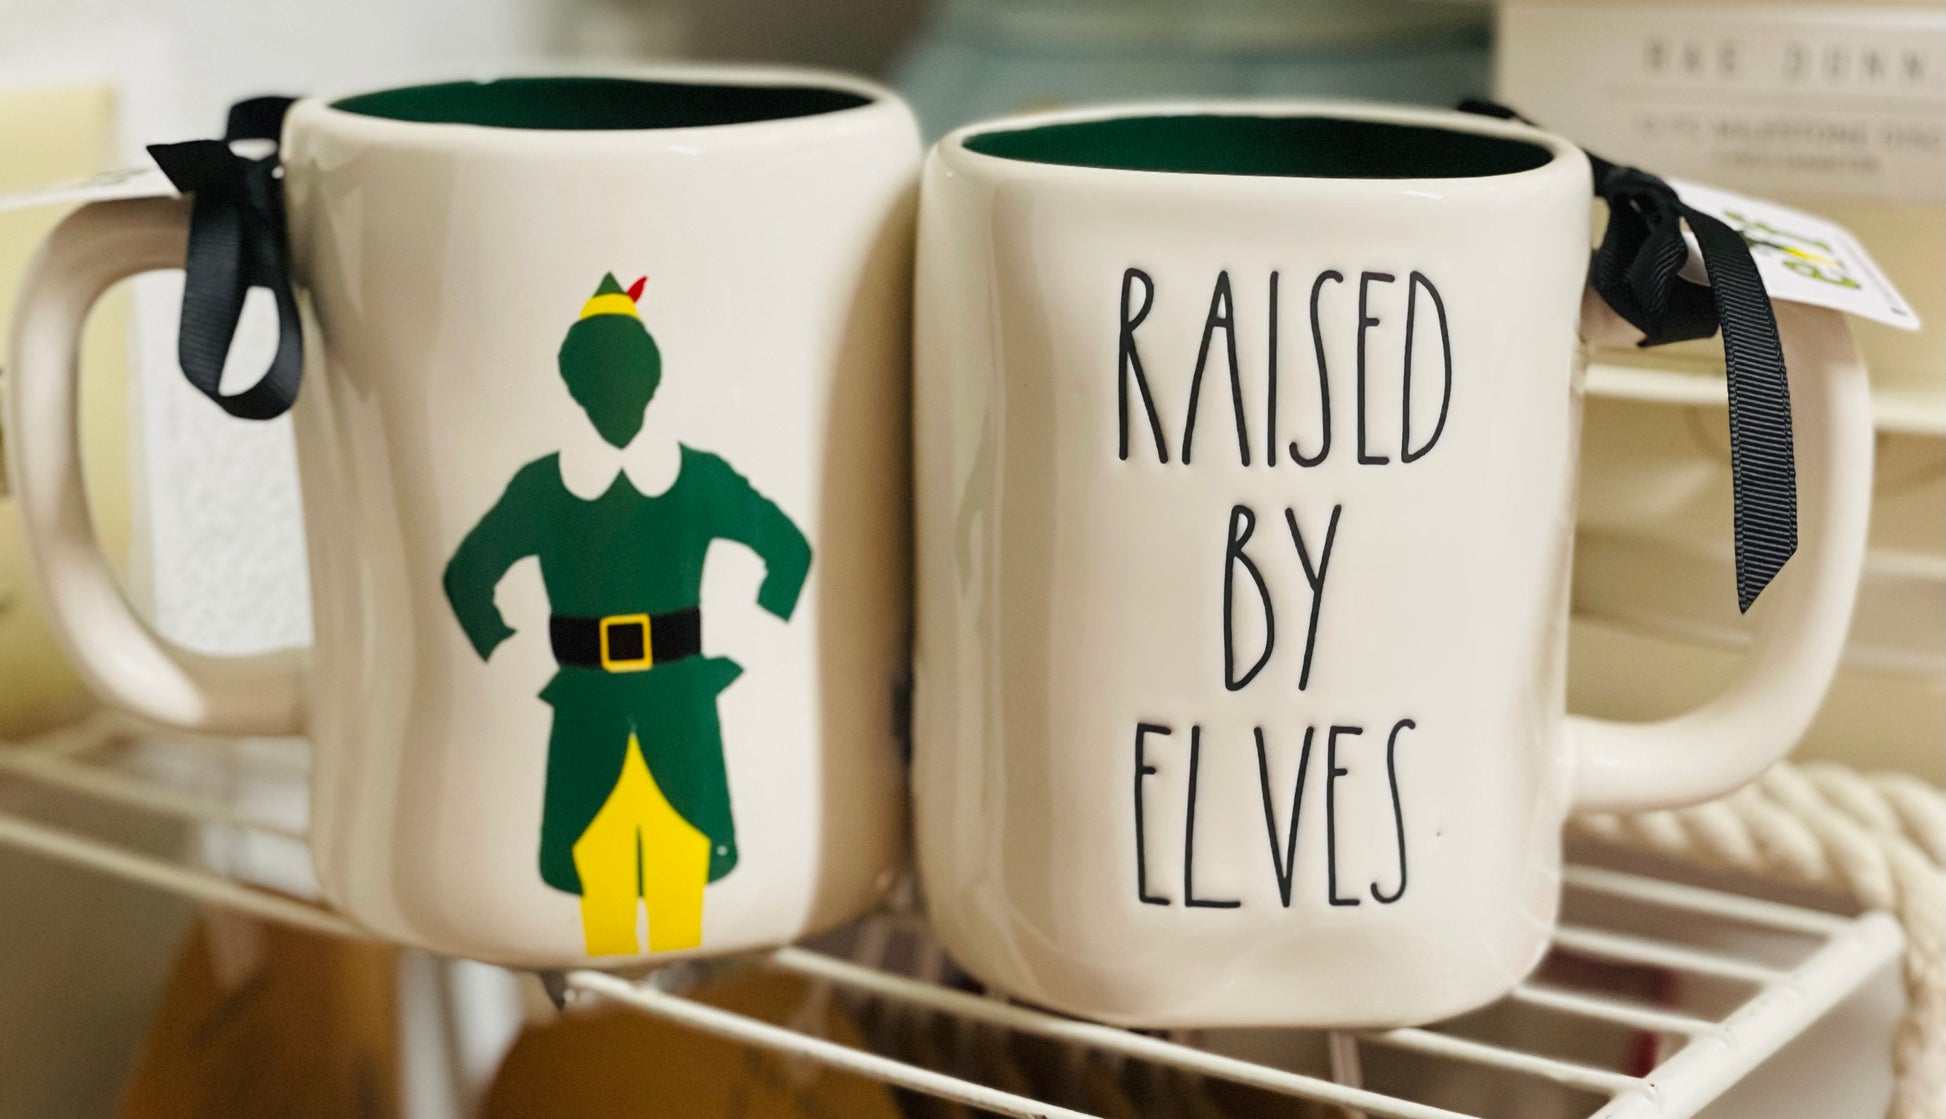 New Rae Dunn ceramic Buddy The Elf movie mug-RAISED BY ELVES – You